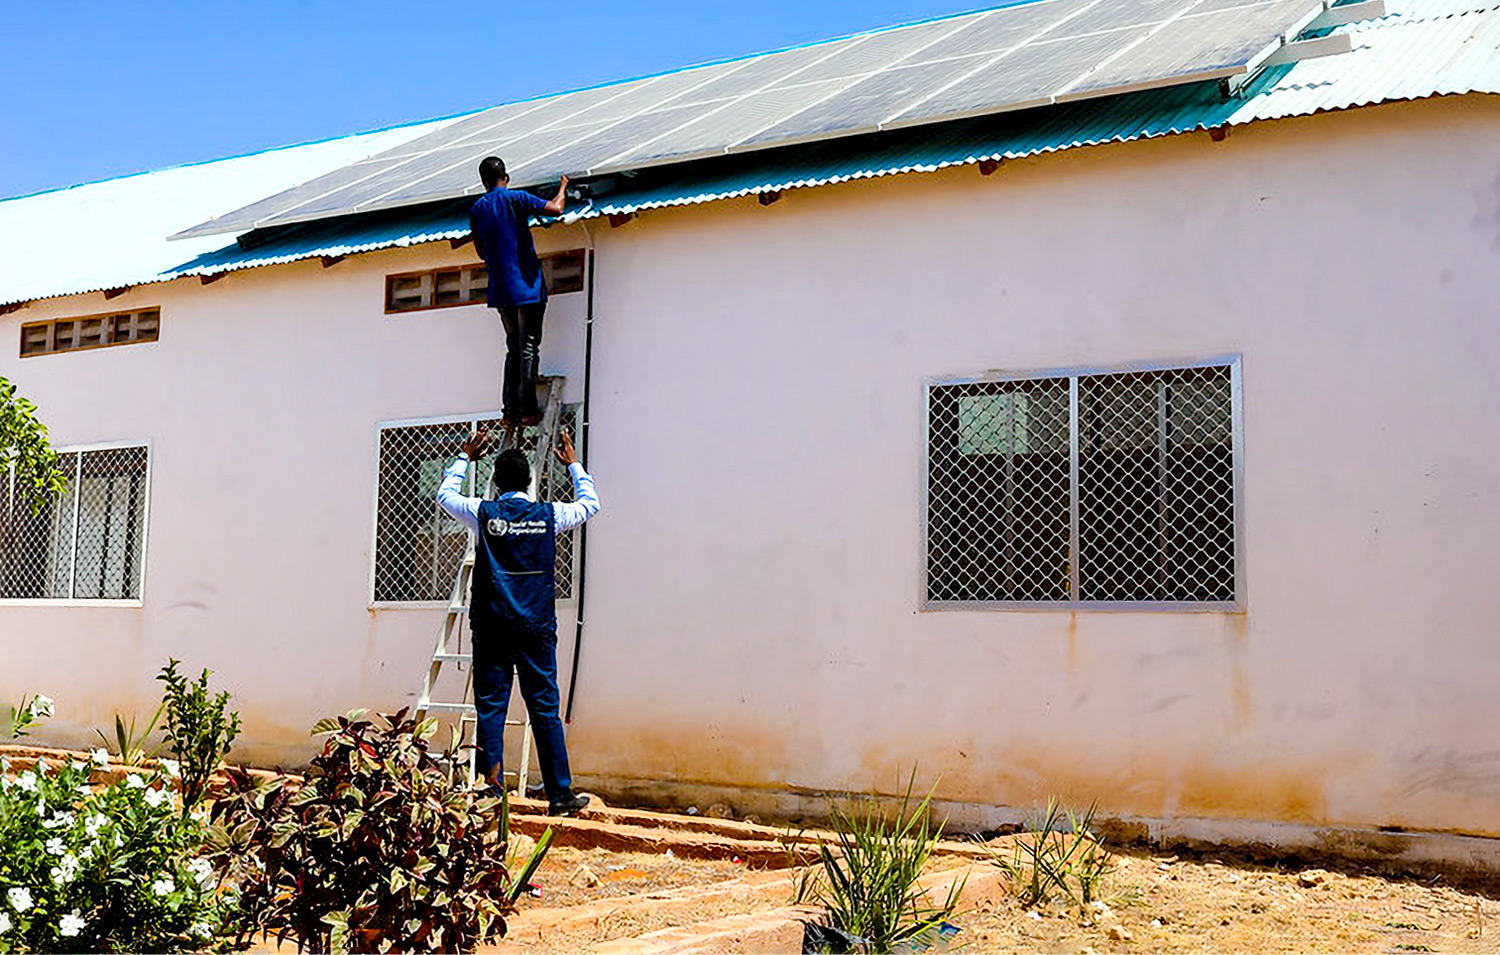 Workers install solar panels atop the roof of Hanaano General Hospital in Dusamareb, Somalia. (Photo: WHO Somalia)